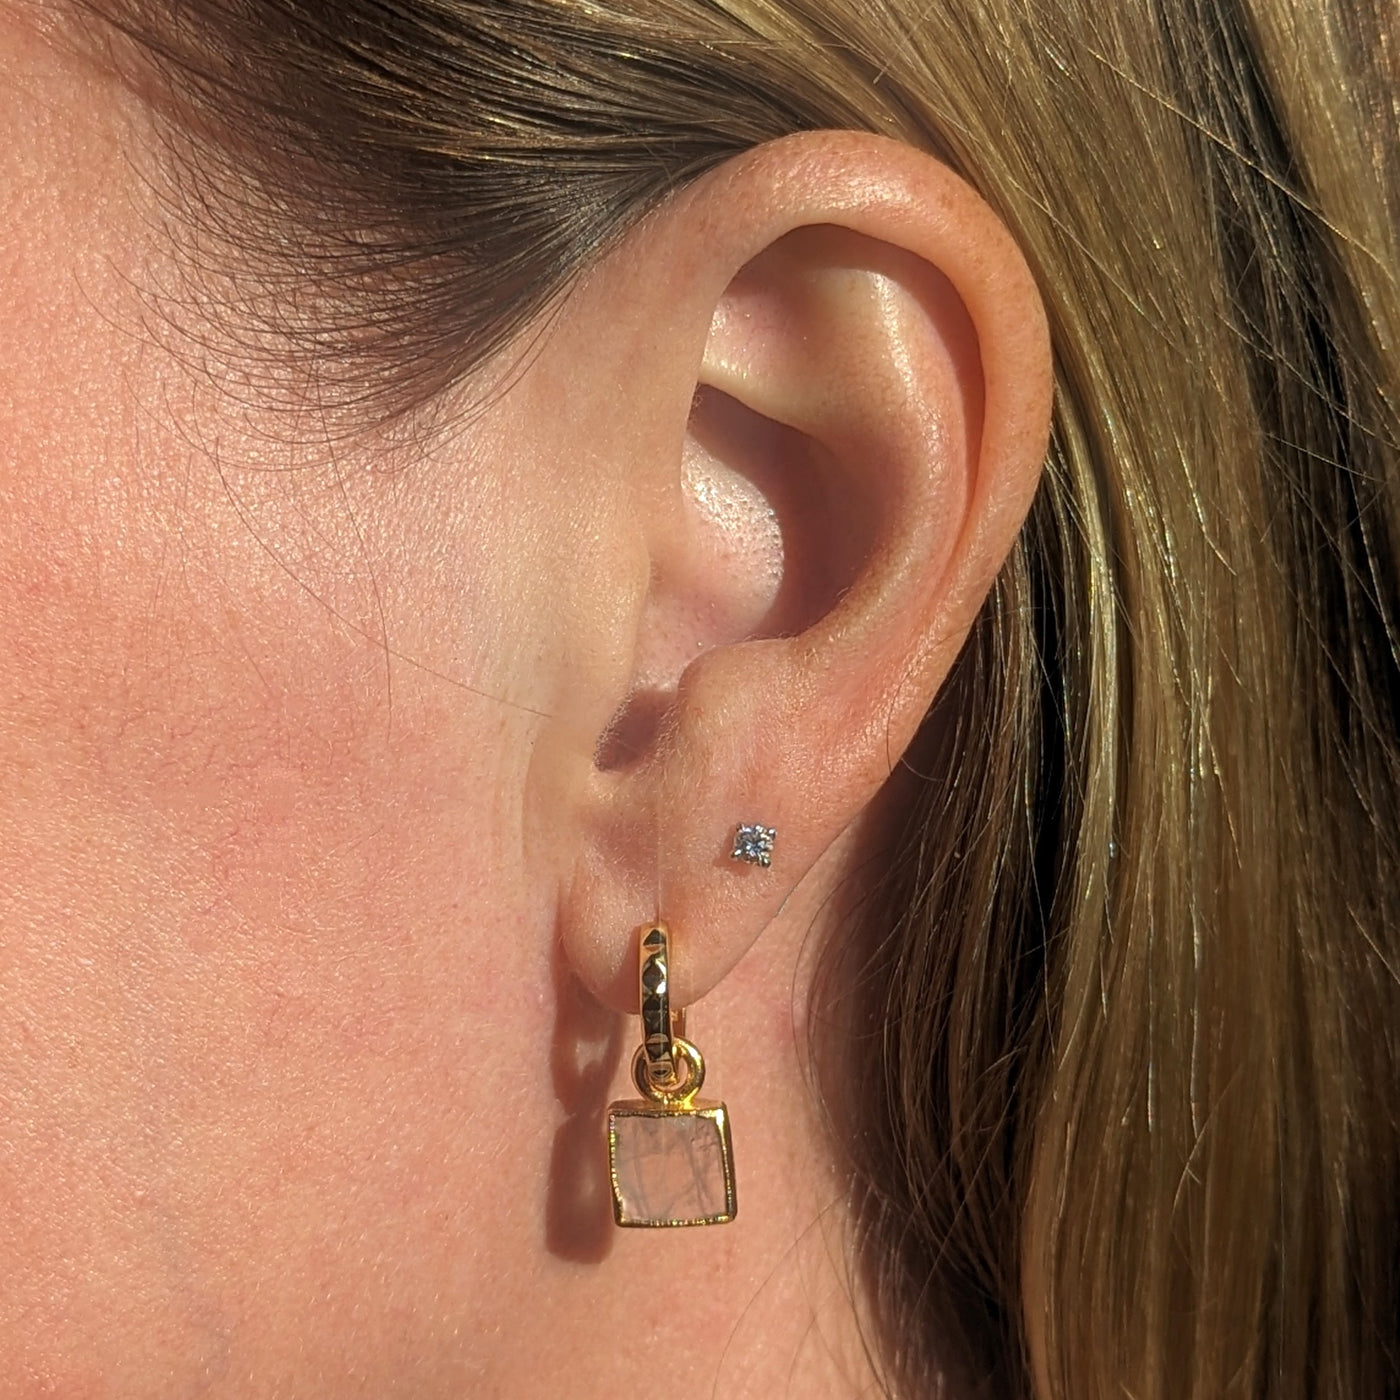 gold plated rose quartz square charm hoop earrings